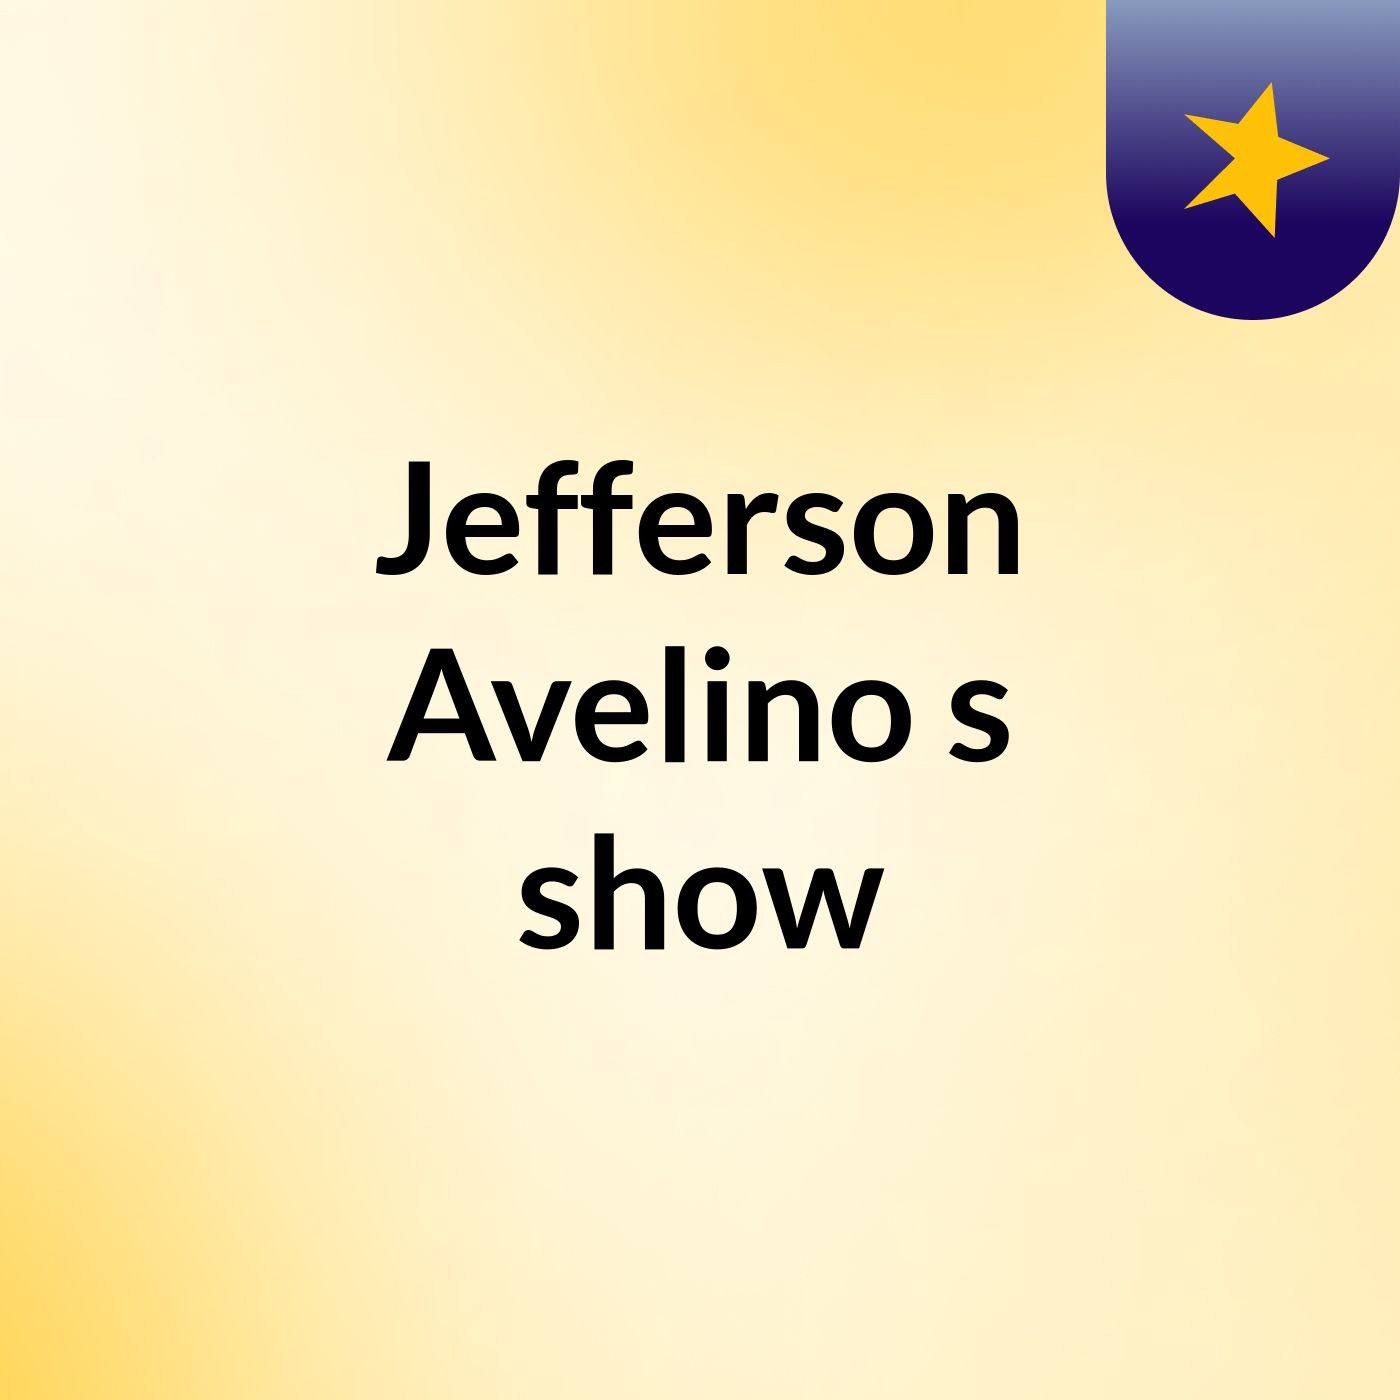 Jefferson Avelino's show